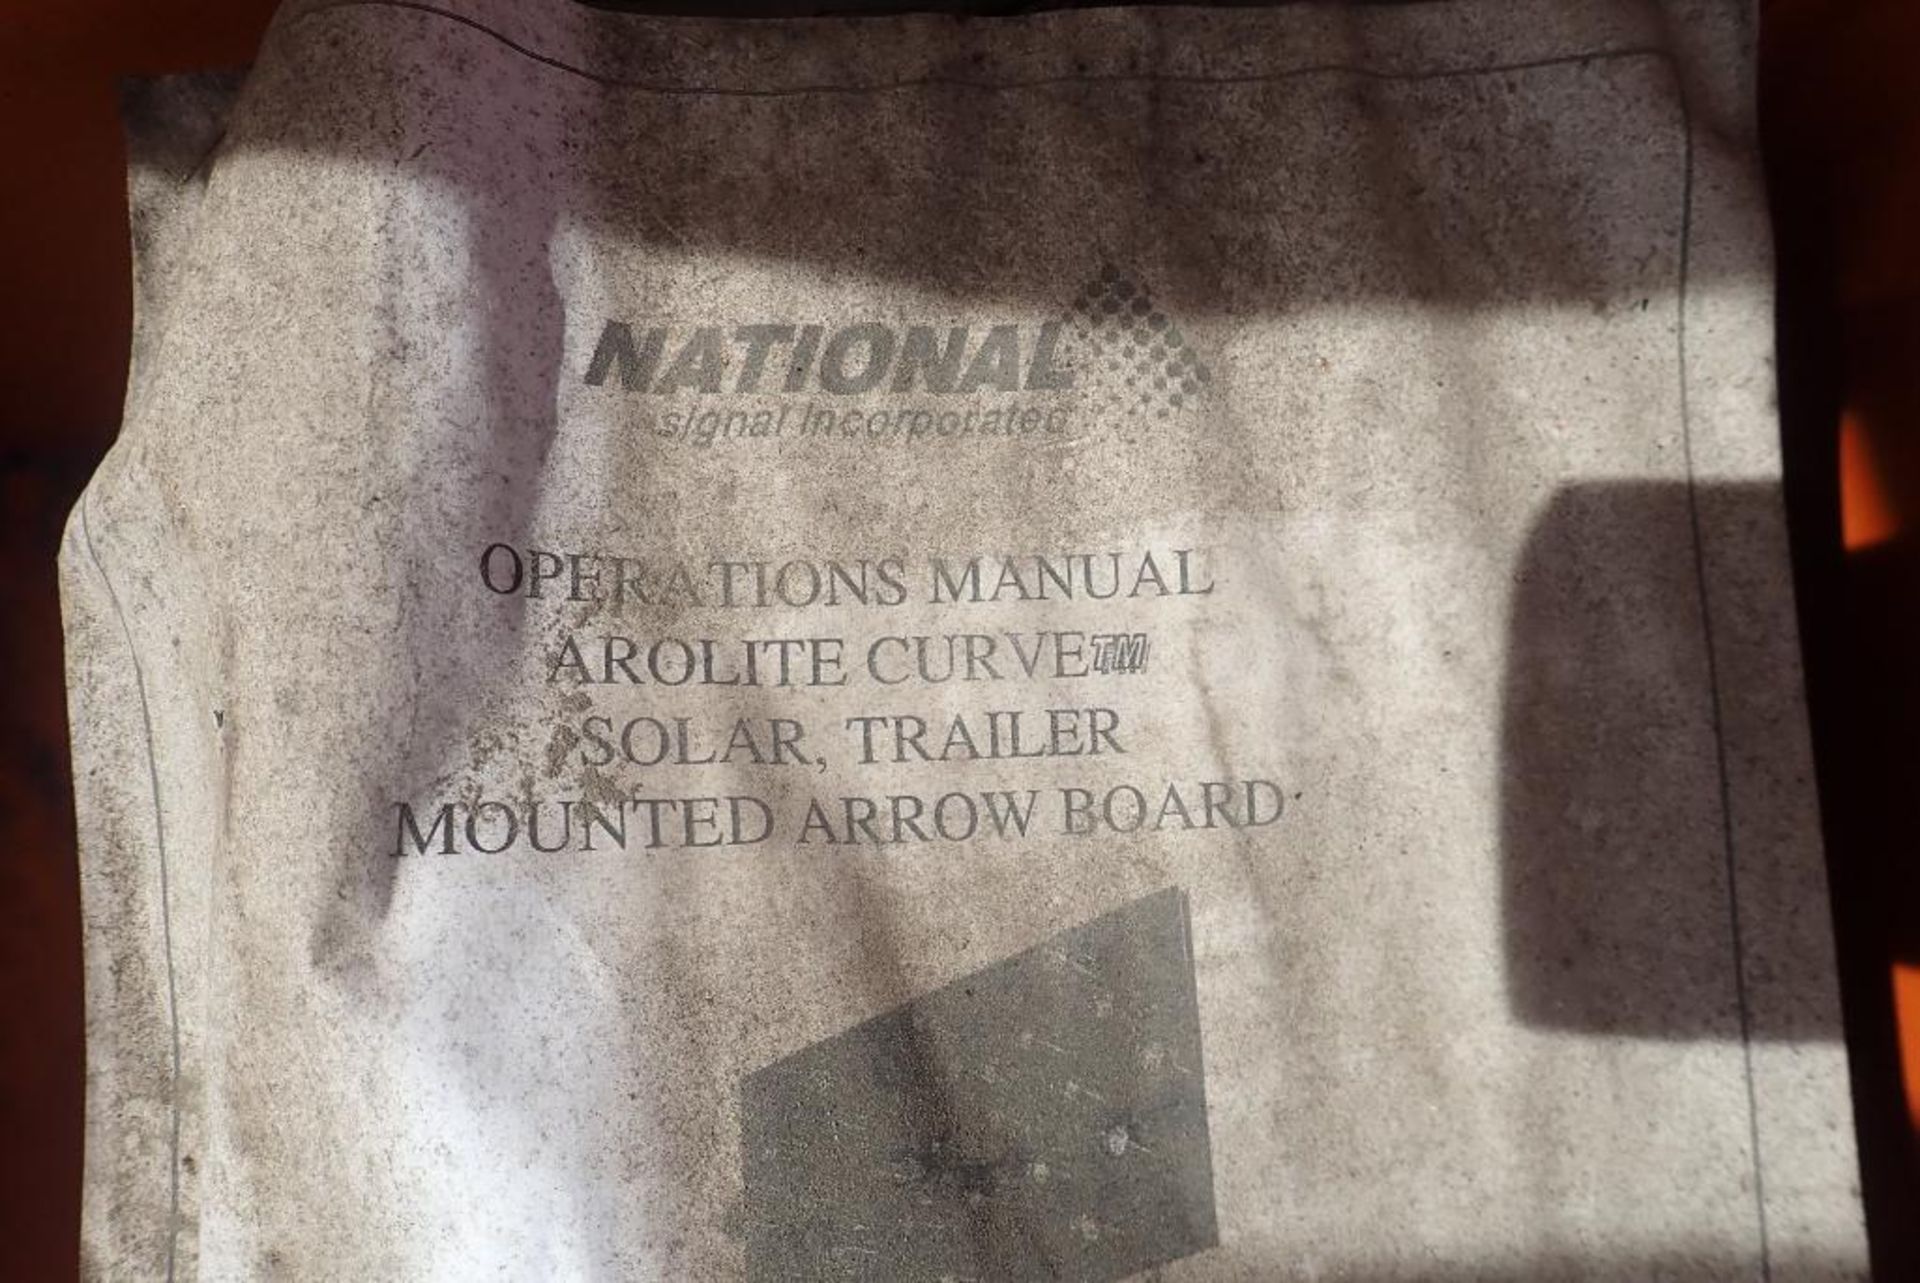 2018 National Signal Inc. Arolite Curve Solar Powered Single Axle Trailer Mounted Arrow Board. - Image 5 of 7